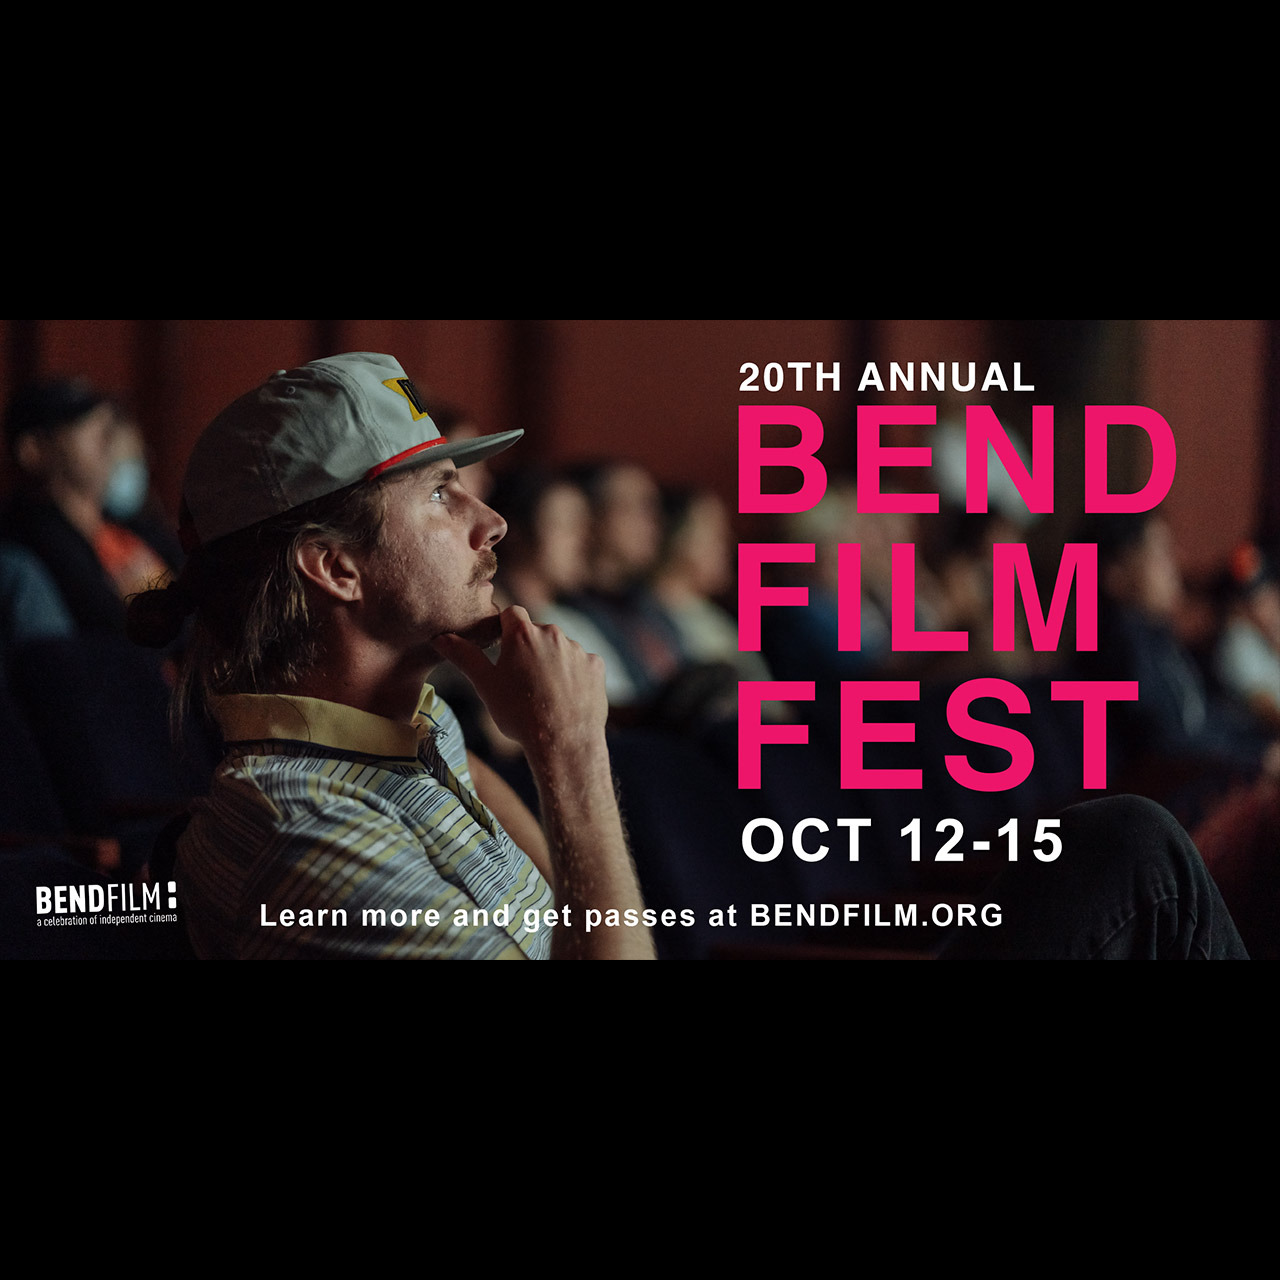 Bend Film Festival 20th anniversary image